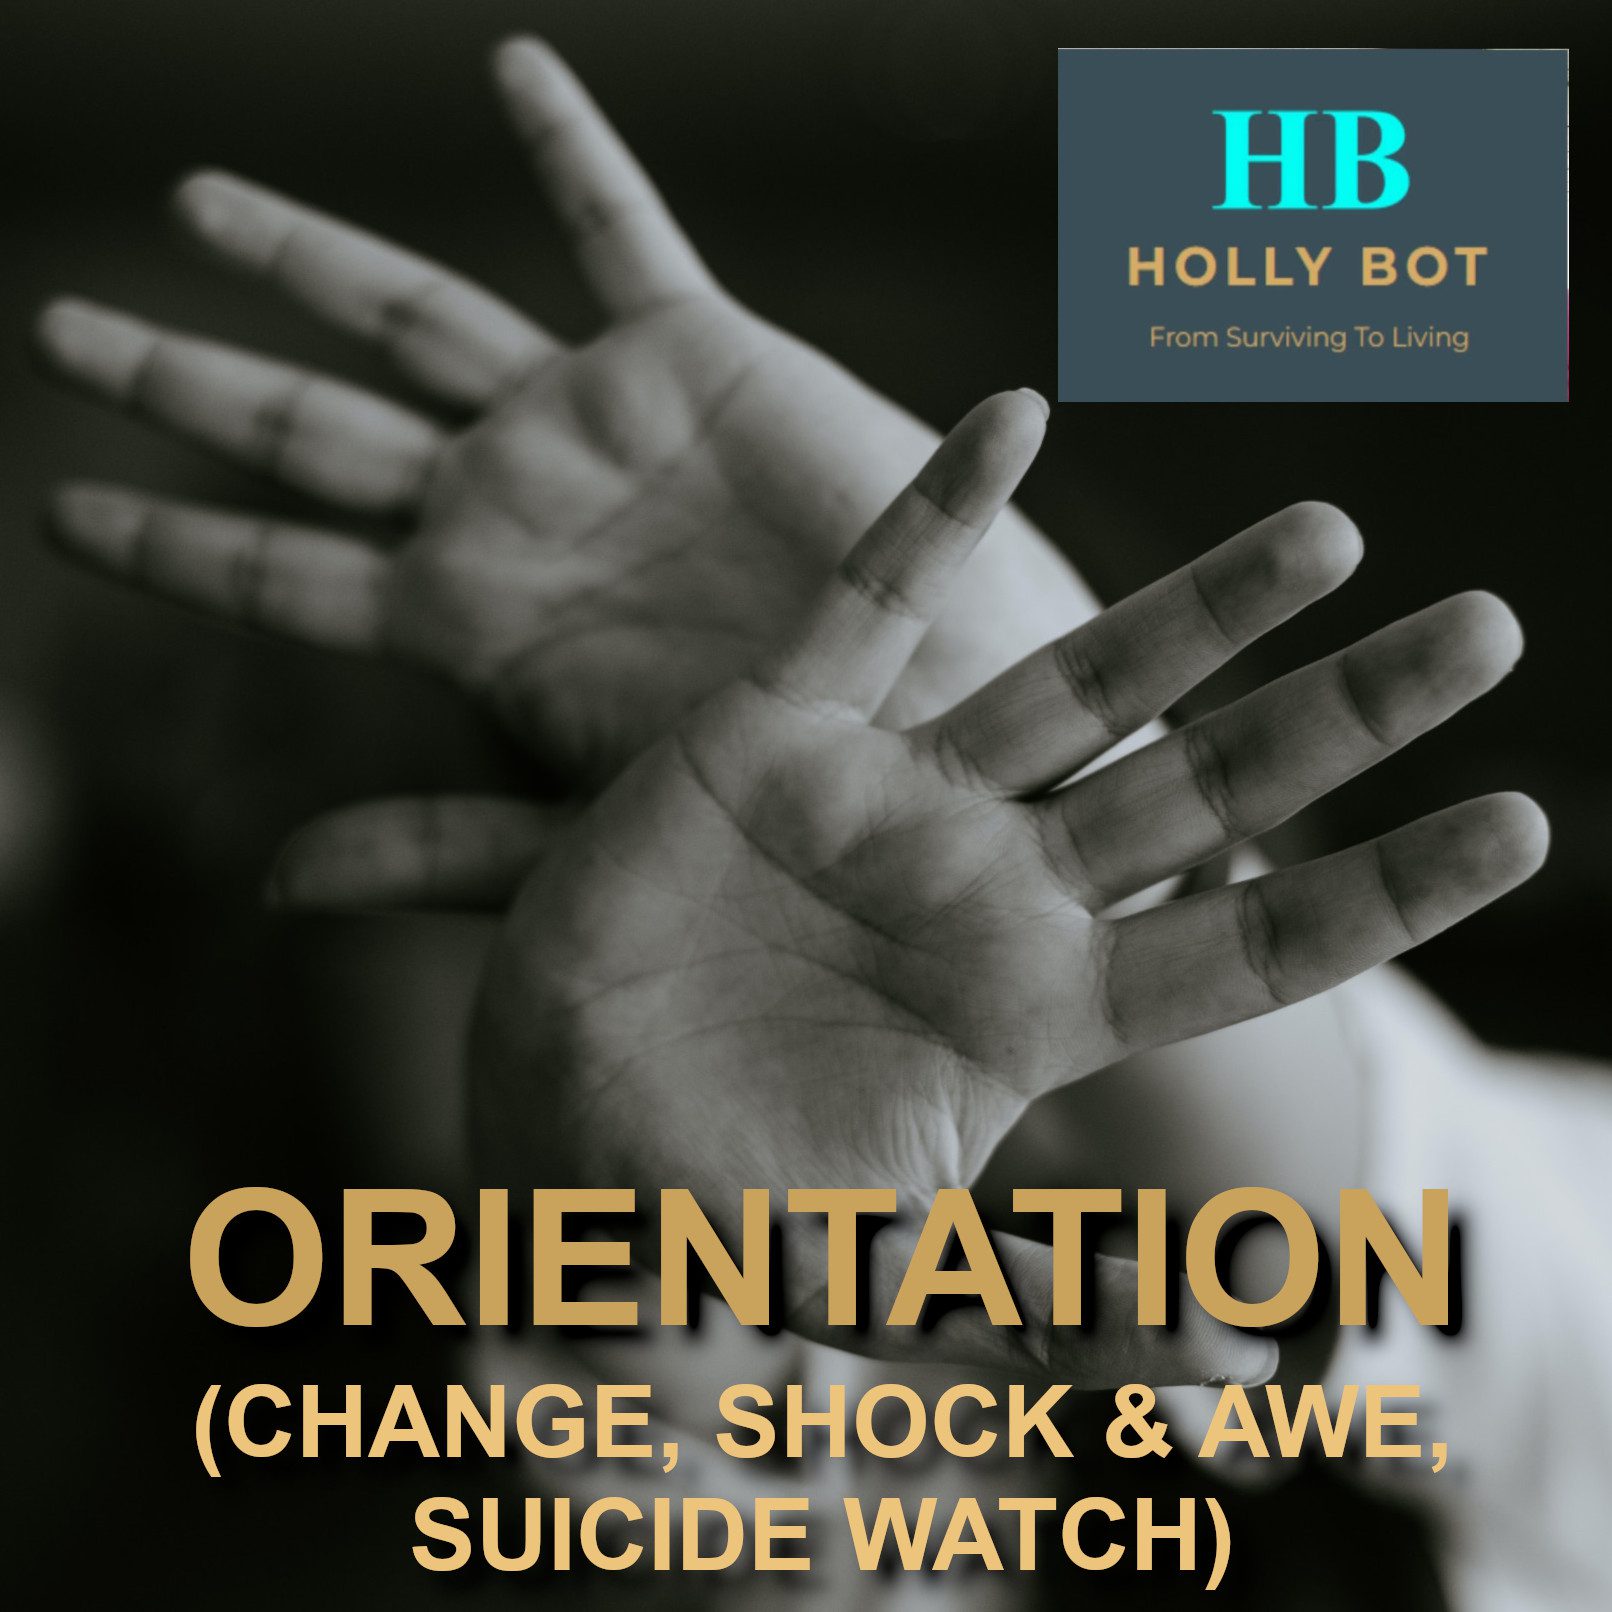 (04) ORIENTATION (CHANGE, SHOCK & AWE, SUICIDE WATCH)